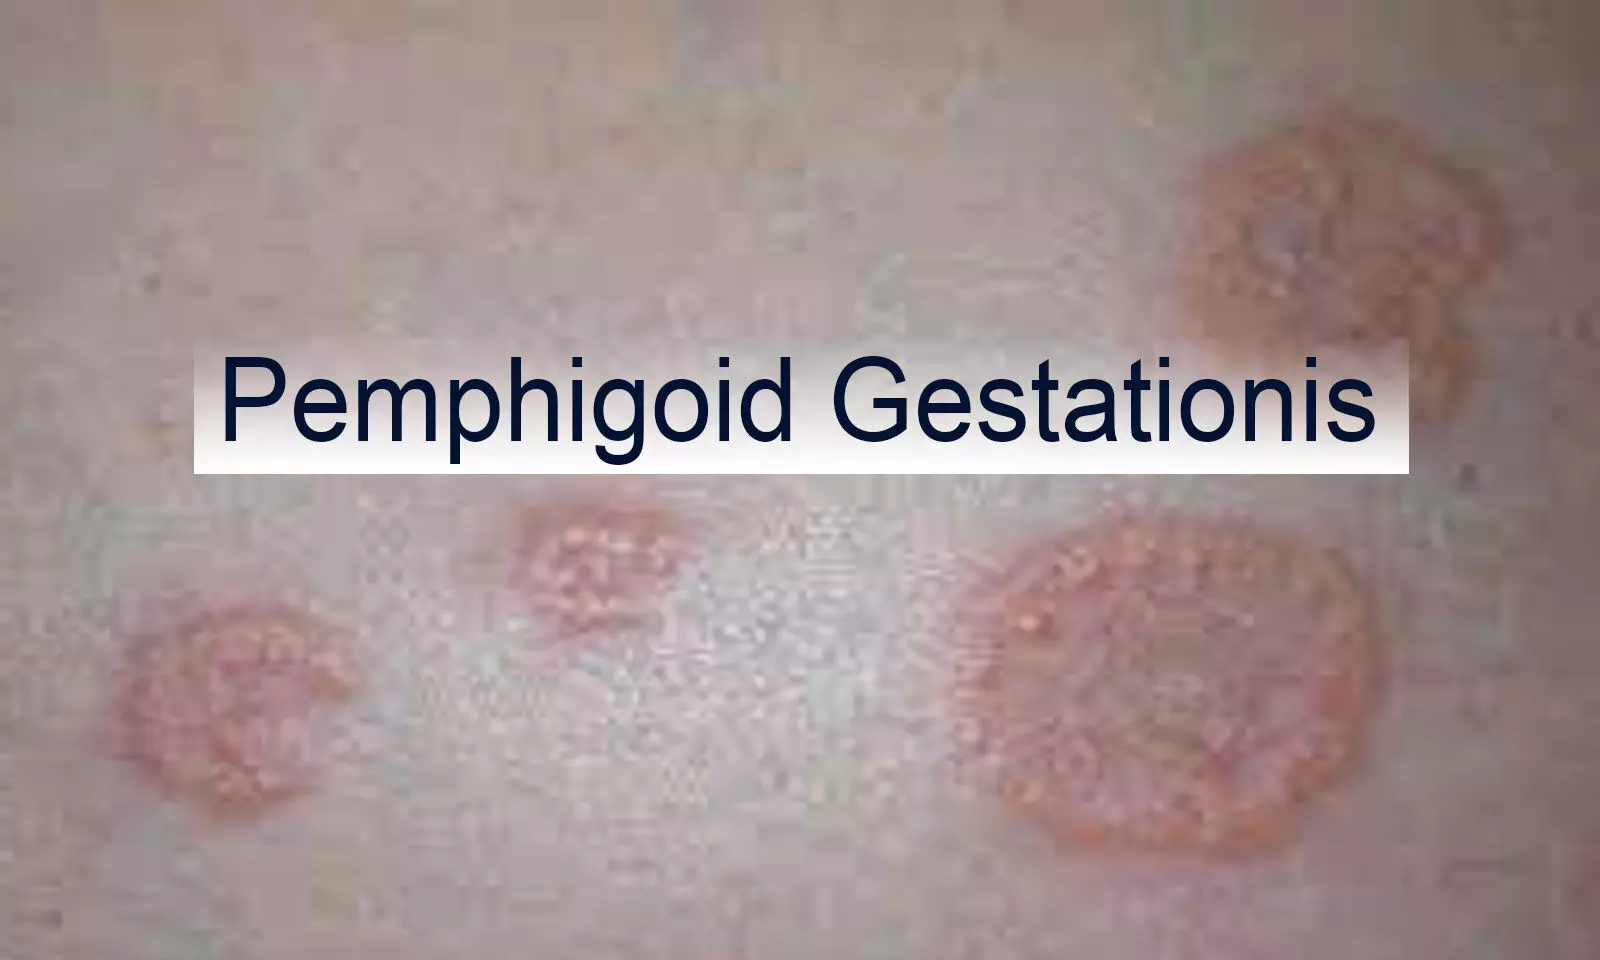 Case of Pemphigoid Gestationis  reported in NEJM